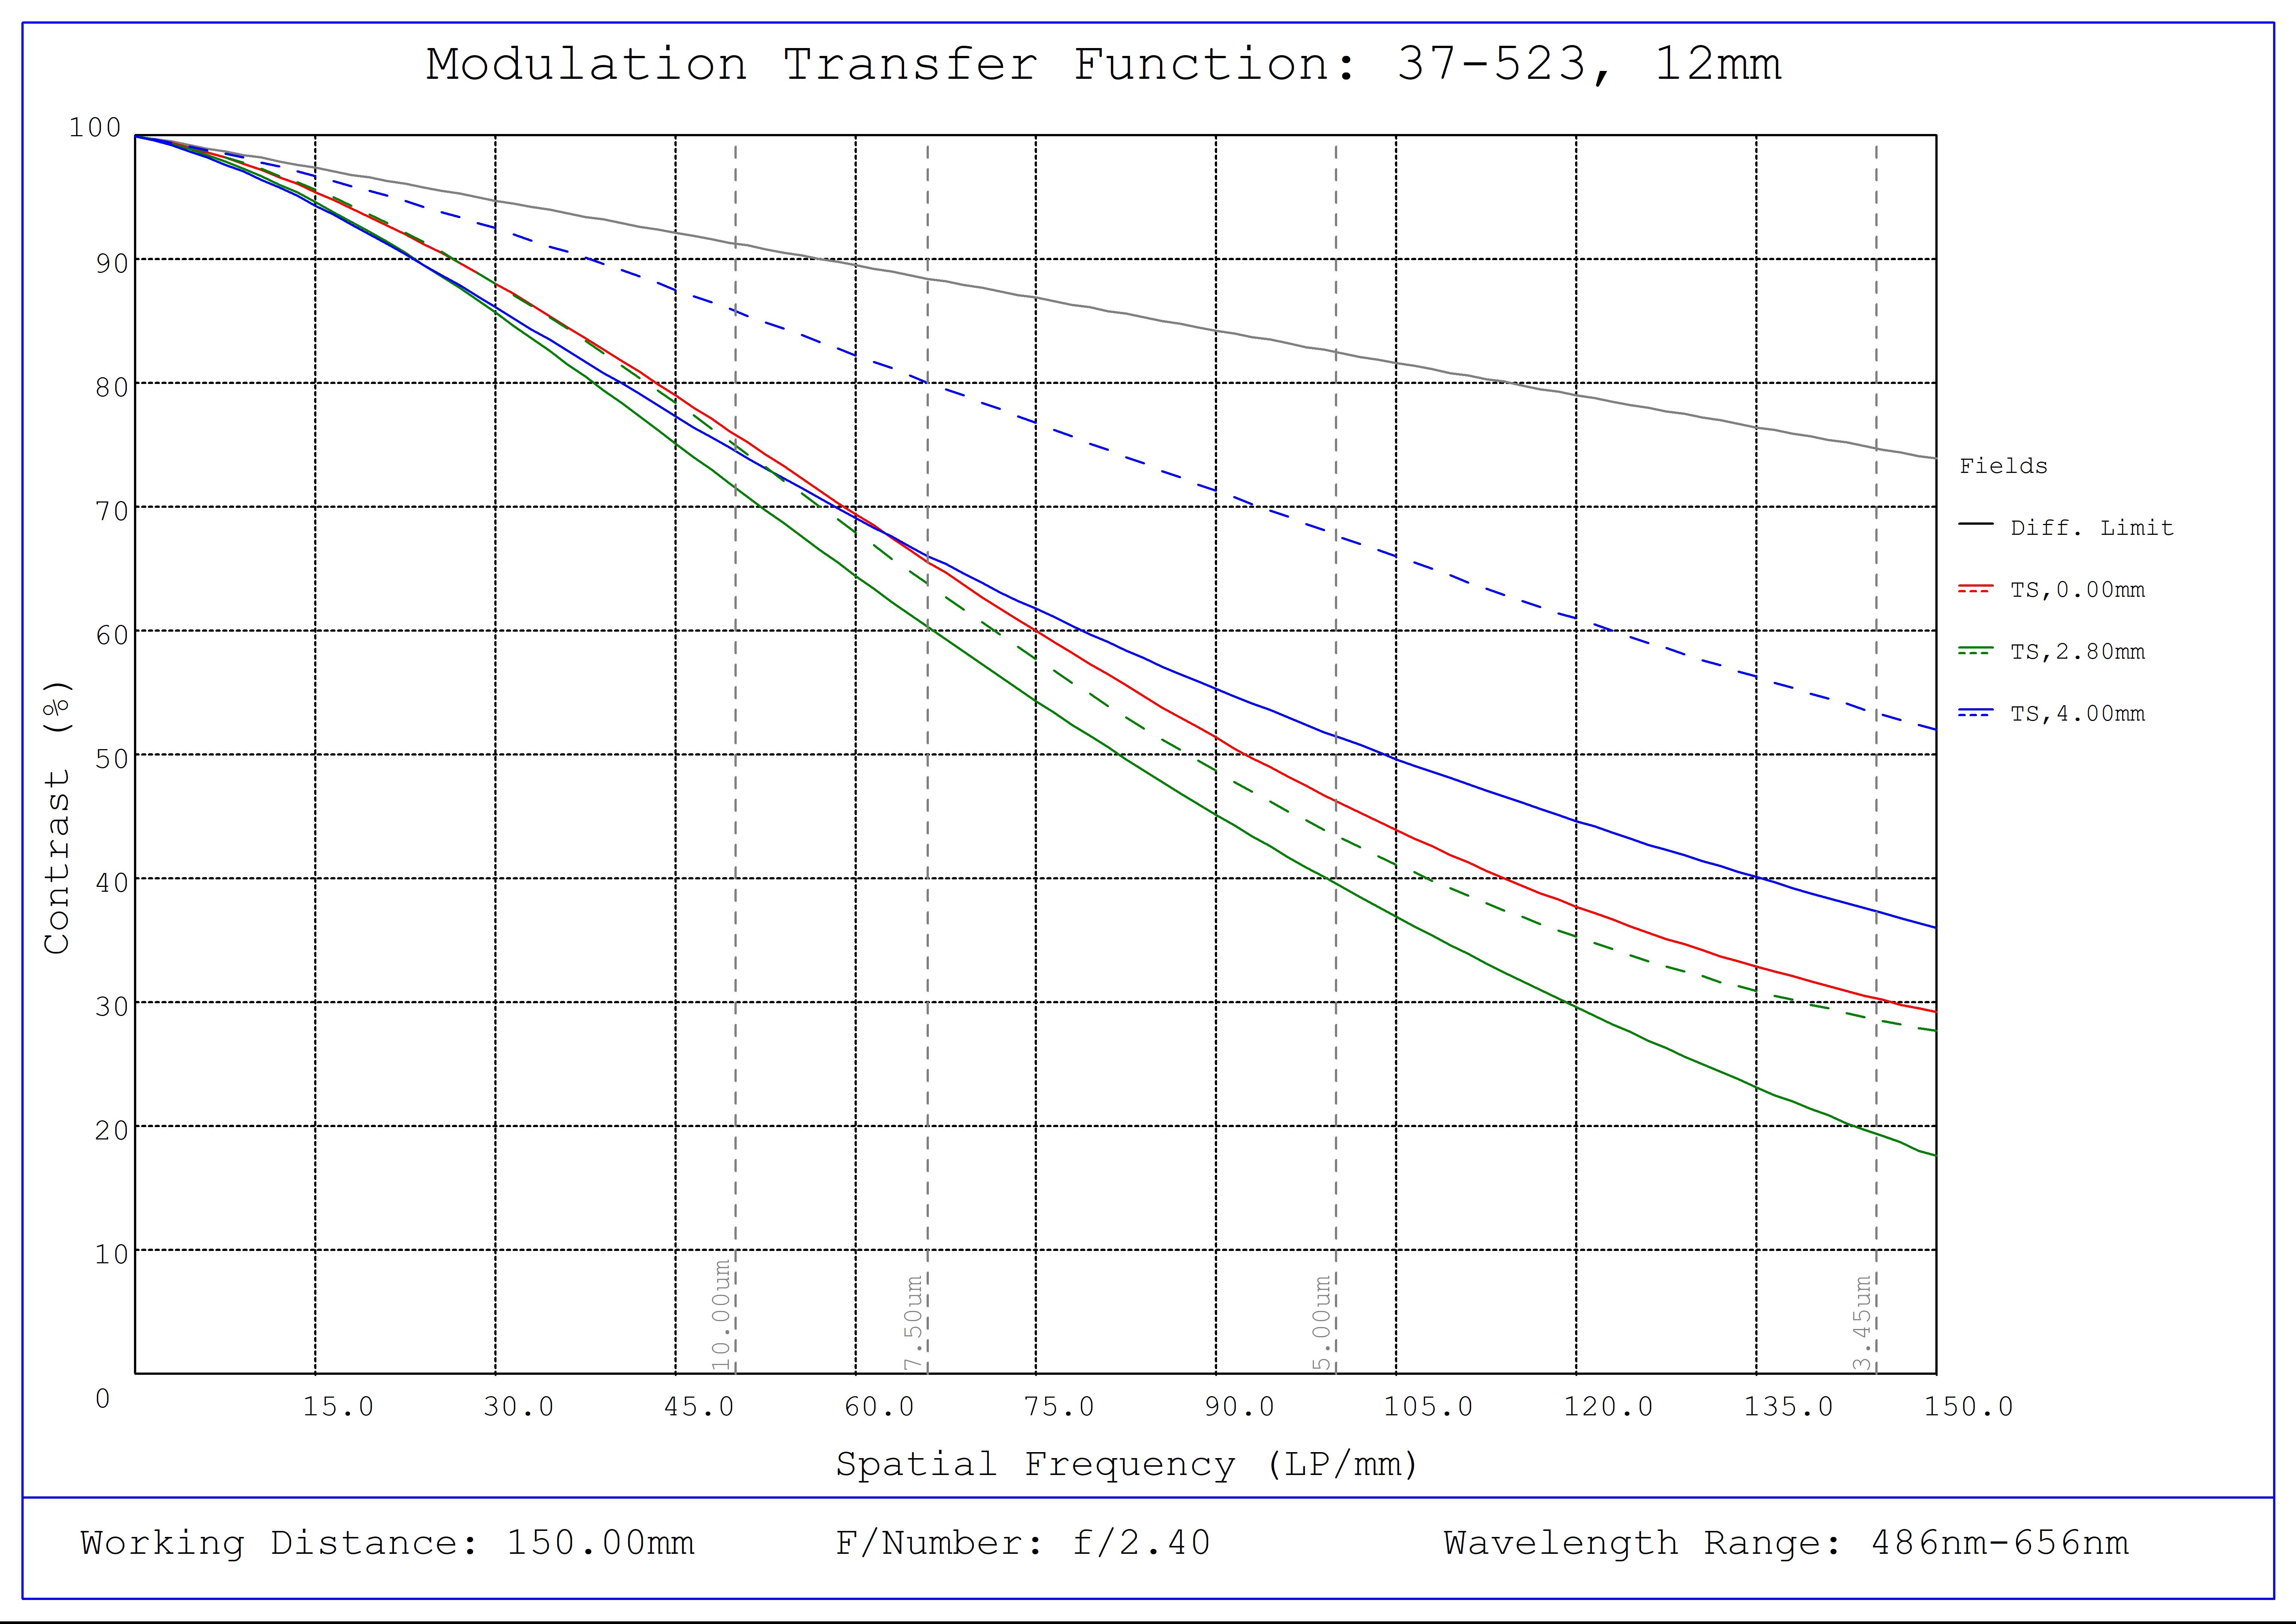 #37-523, 12mm FL, Liquid Lens M12 Lens, Modulated Transfer Function (MTF) Plot, 150mm Working Distance, f2.4